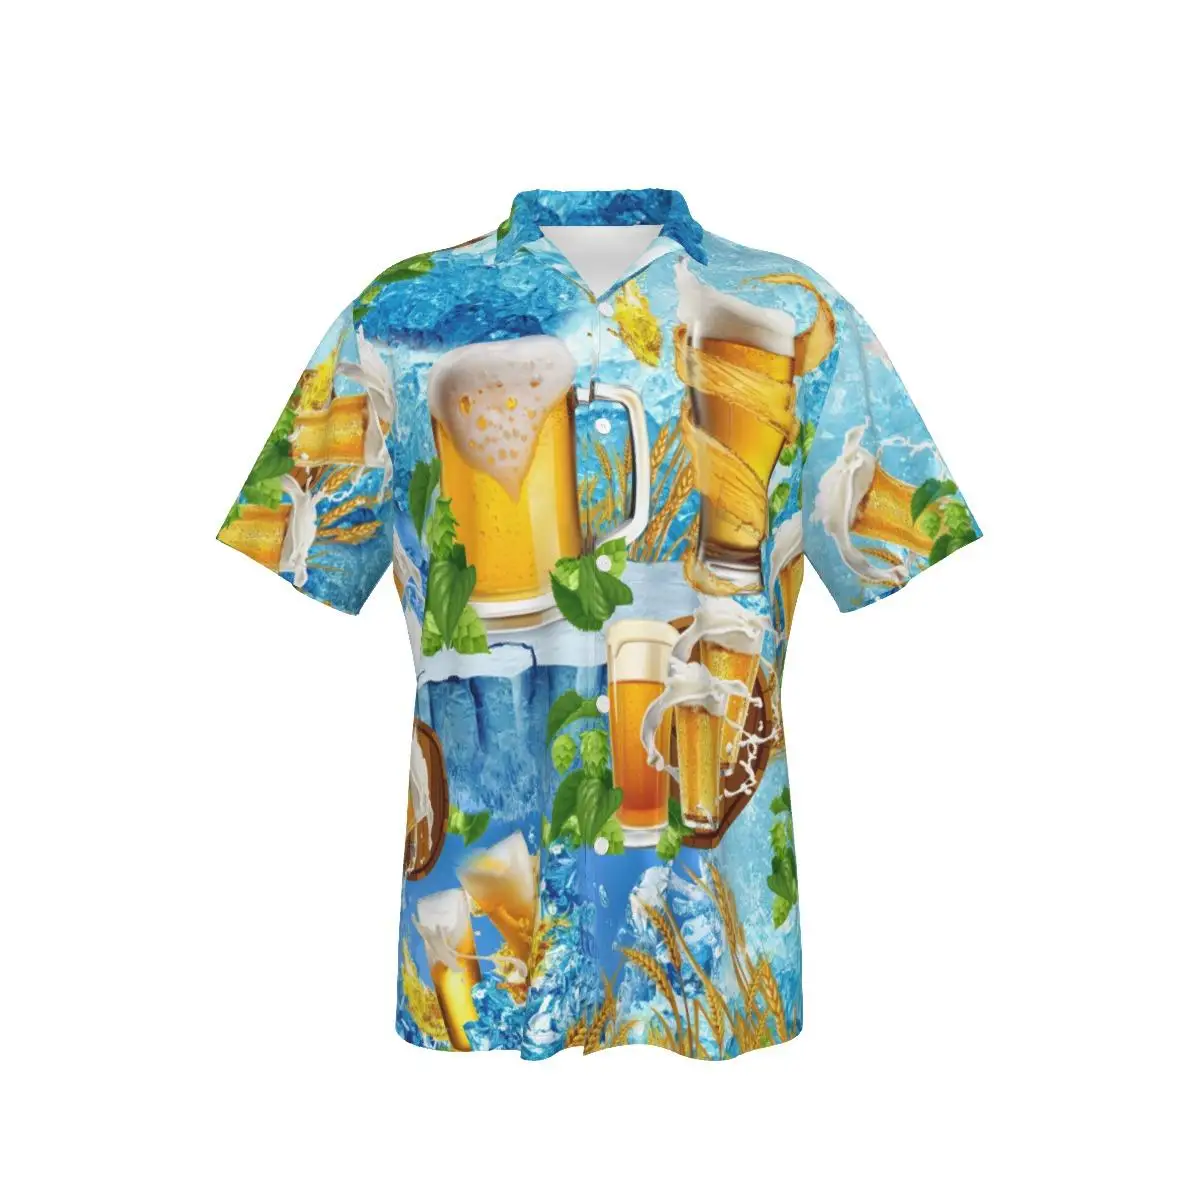 

New Cool Shirts for Men Hawaiian Theme Beer Print Summer Feeling Vacation Wear 3D Print Tops Hawaii Style Clothing US Size